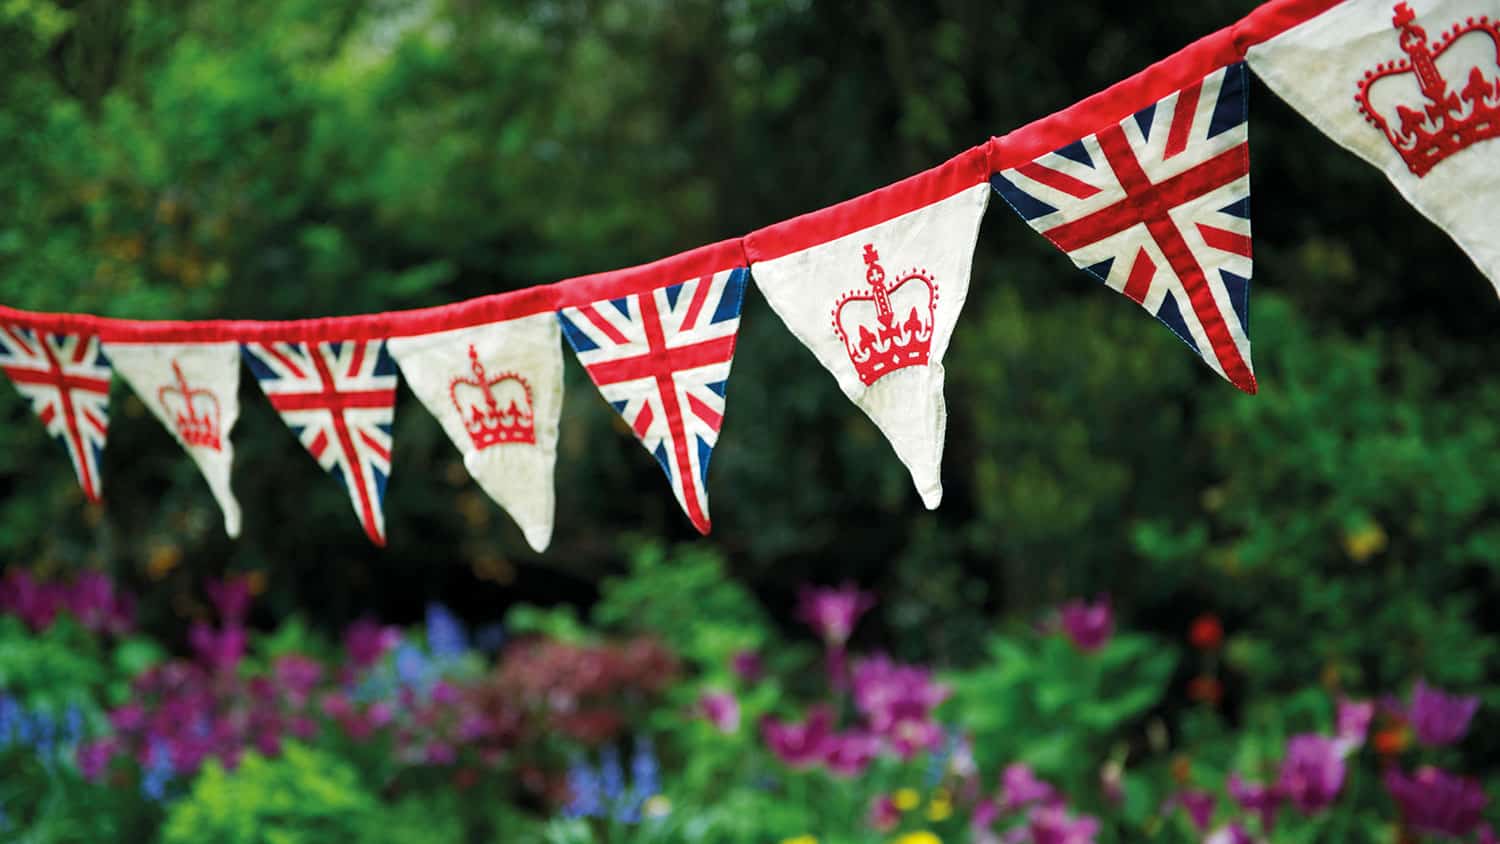 Jubilee banner hanging in a garden